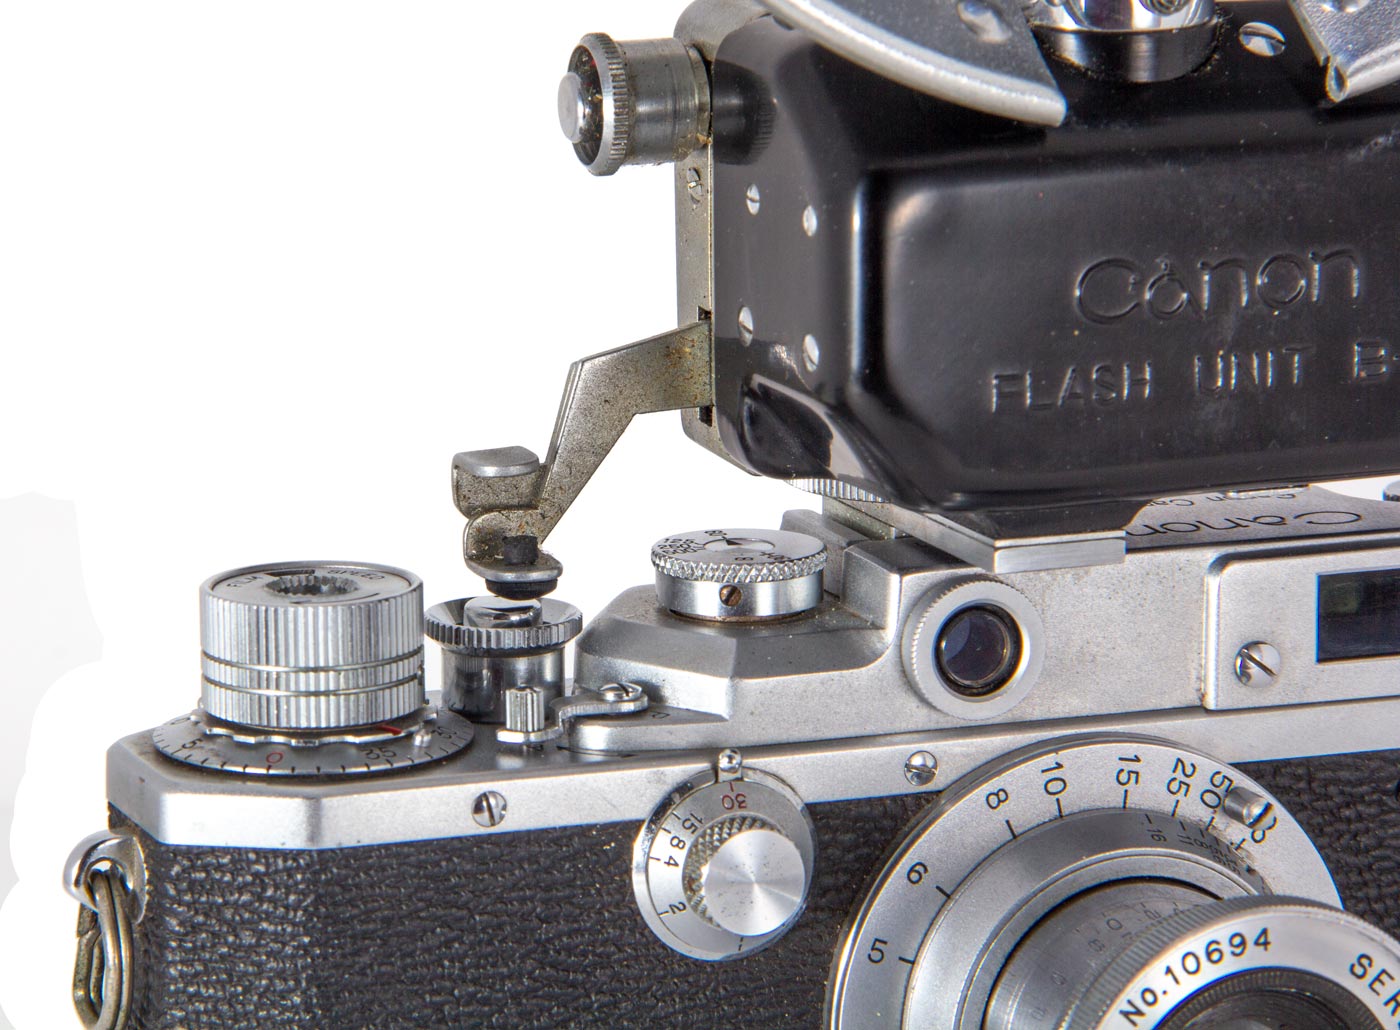 Canon Flash Unit B-III